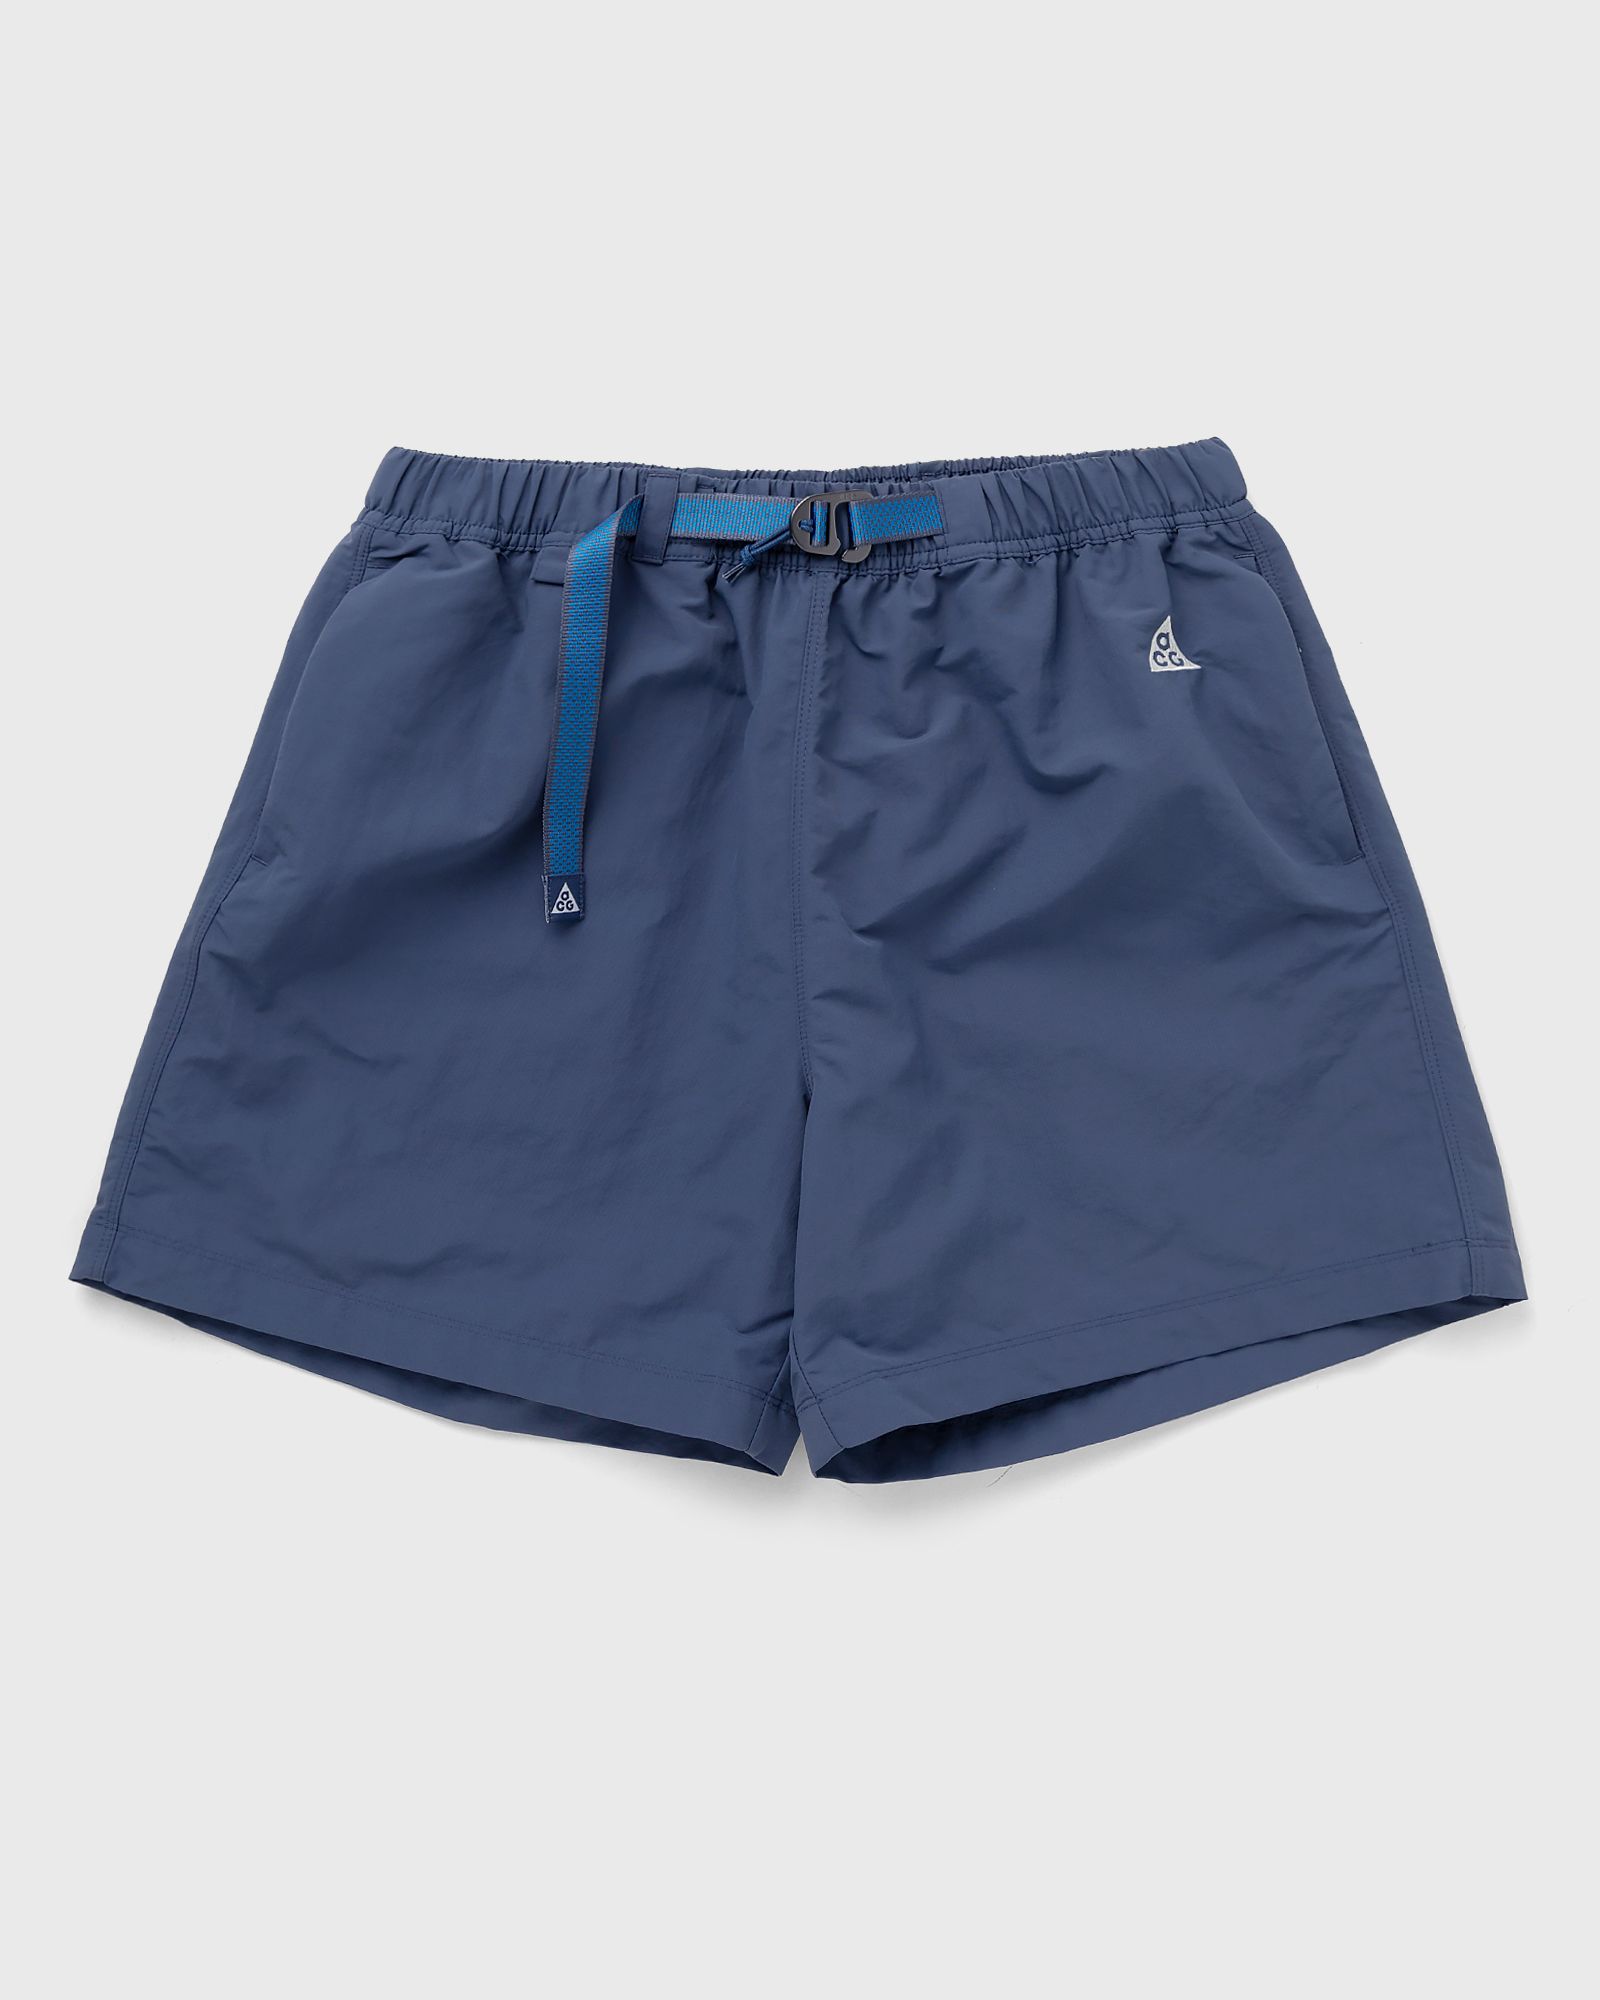 Nike - acg trail shorts men casual shorts blue in größe:xl